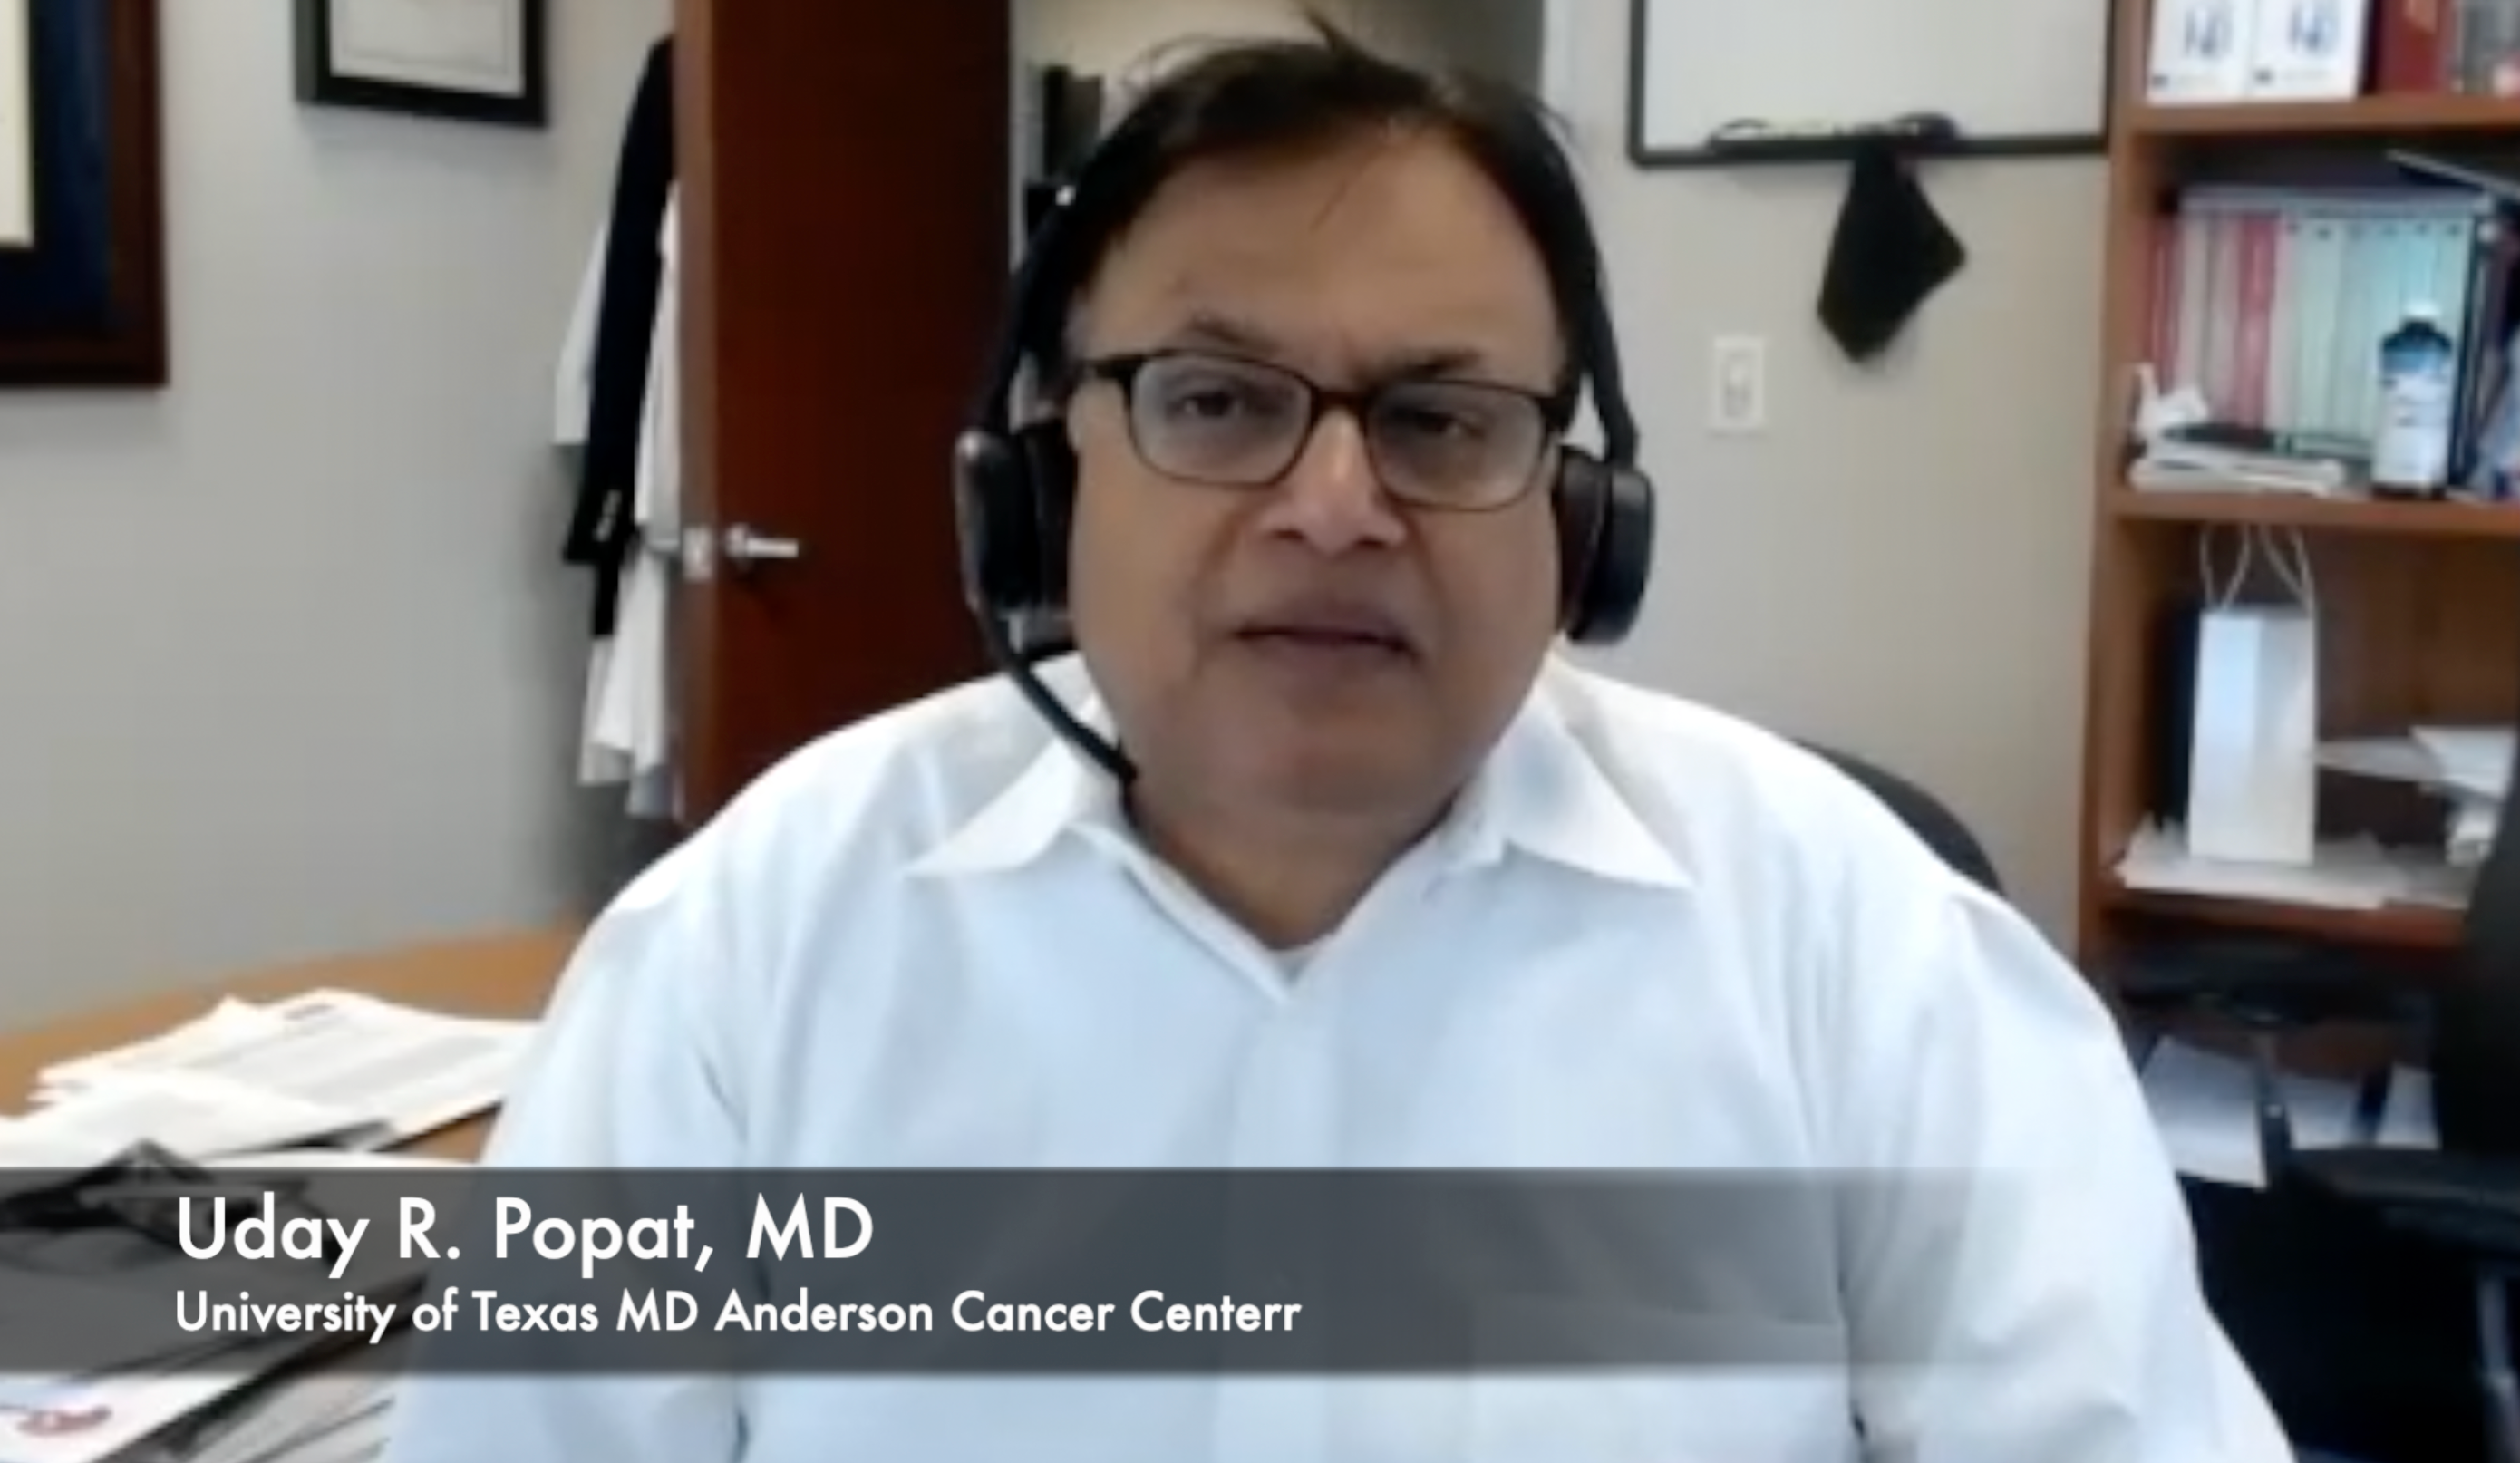 Uday R. Popat, MD, on Post-Transplant Cyclophosphamide Following Myeloablative Busulfan as GVHD Prophylaxis